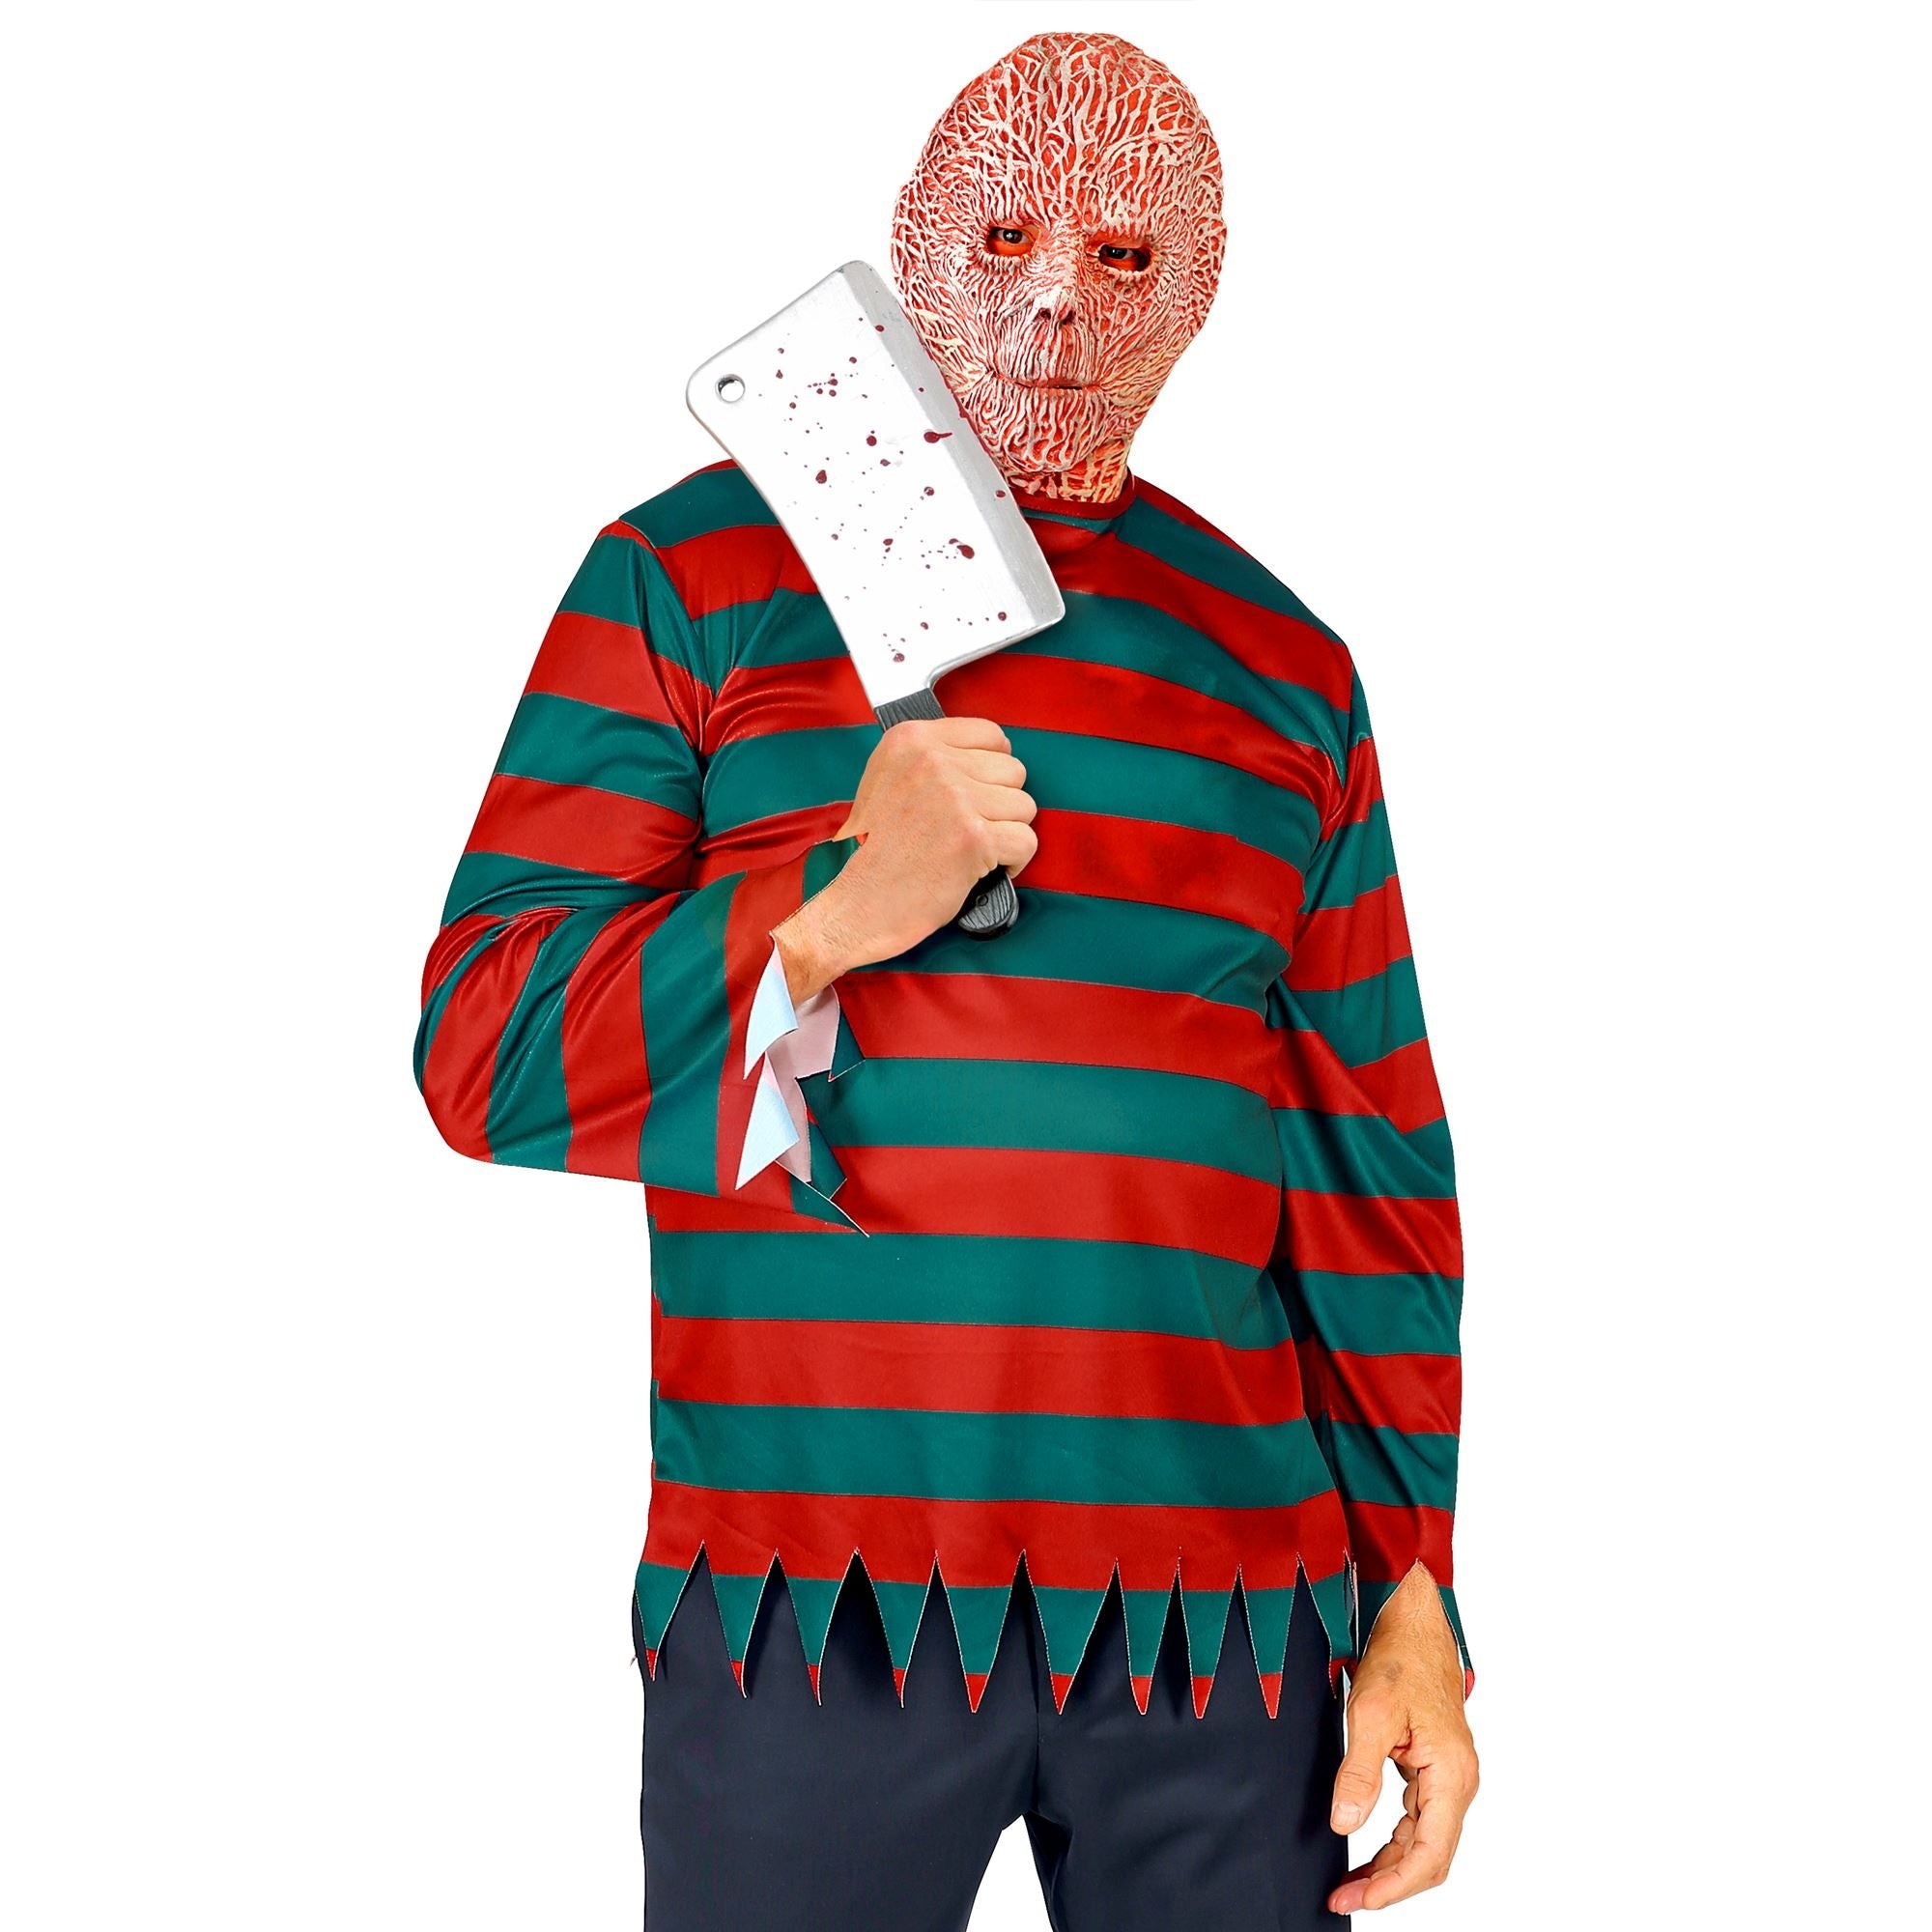 Widmann - Horror Films Kostuum - Gruwelijke Nachtmerrie Freddy Krueger Moordenaar Man - rood,groen - Large / XL - Halloween - Verkleedkleding